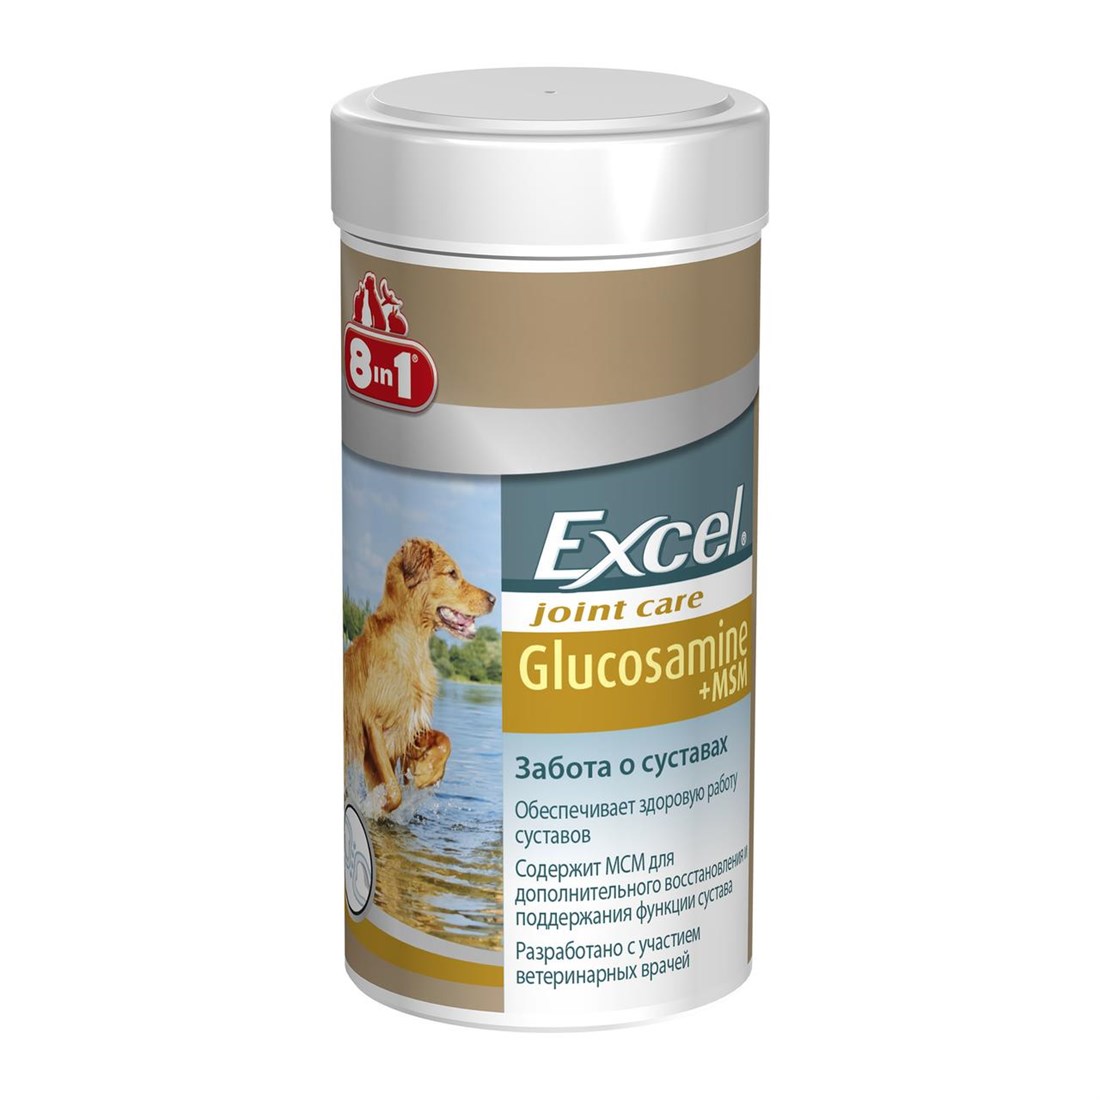 CLZ205 8in1 Excel Glucosamine Msm Eklem Sağlığı Köpek Tableti (55 Tab)